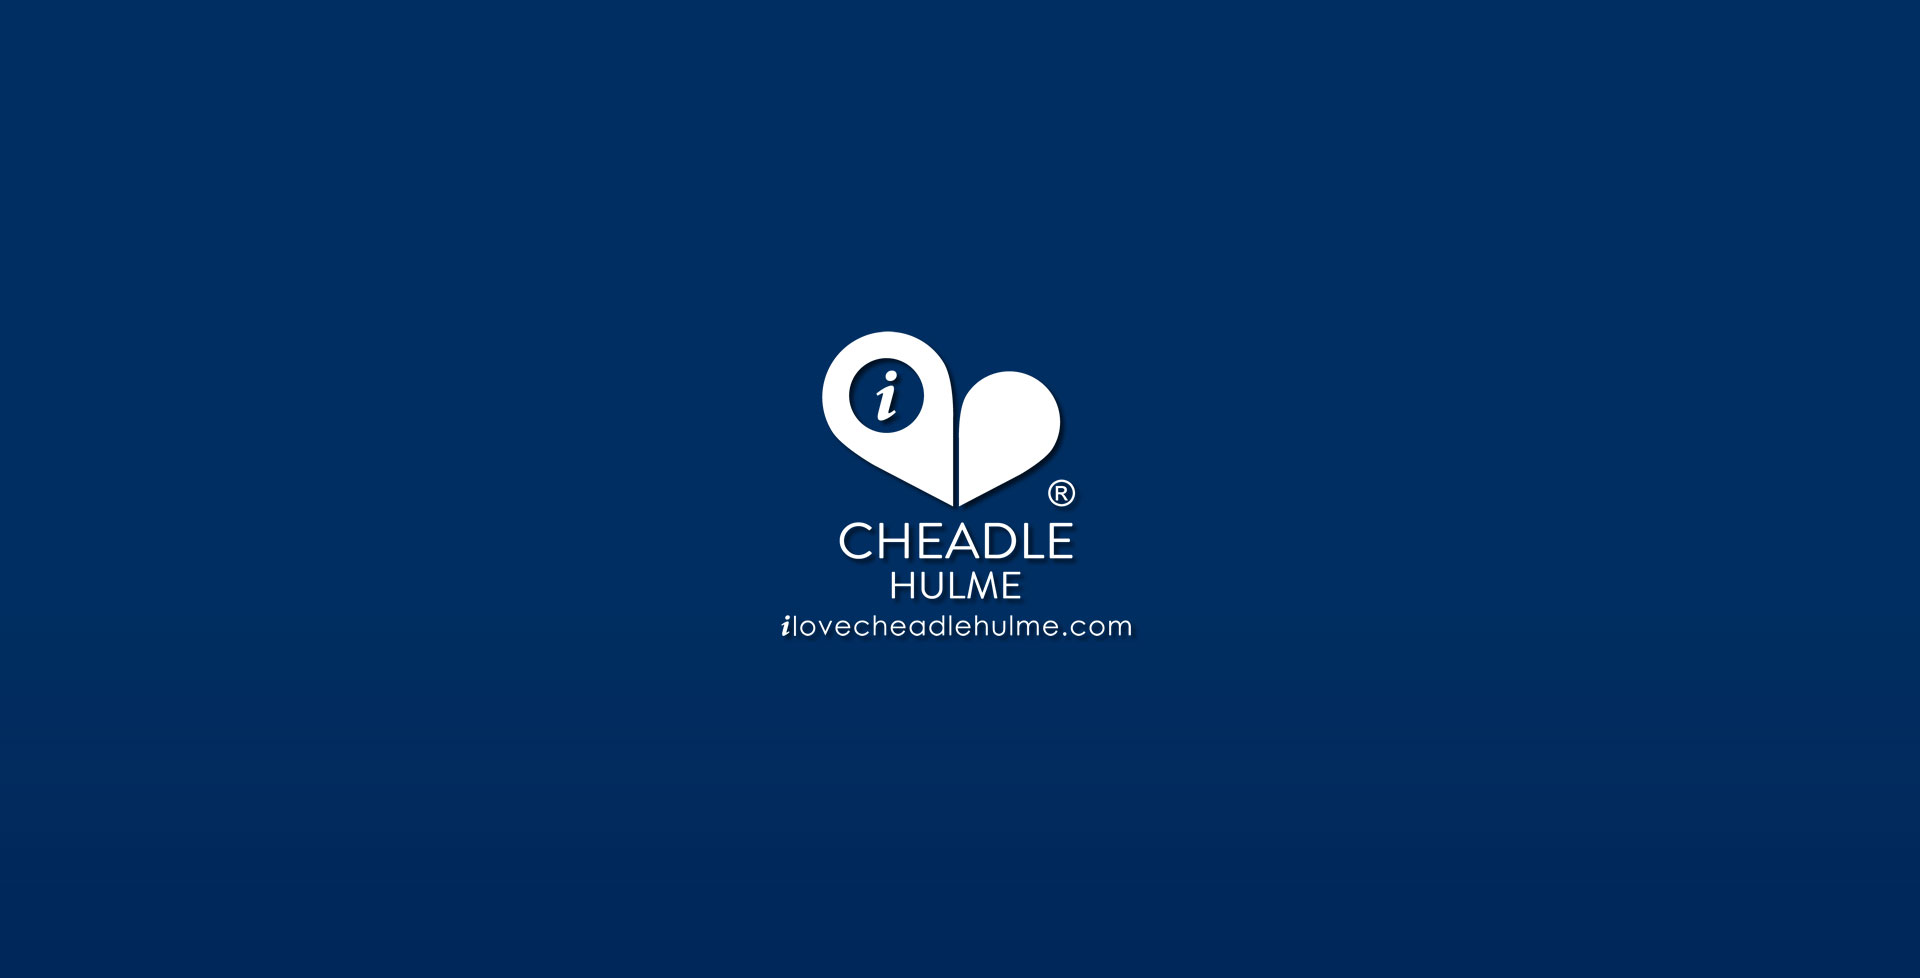 I Love Cheadle Hulme 2019!